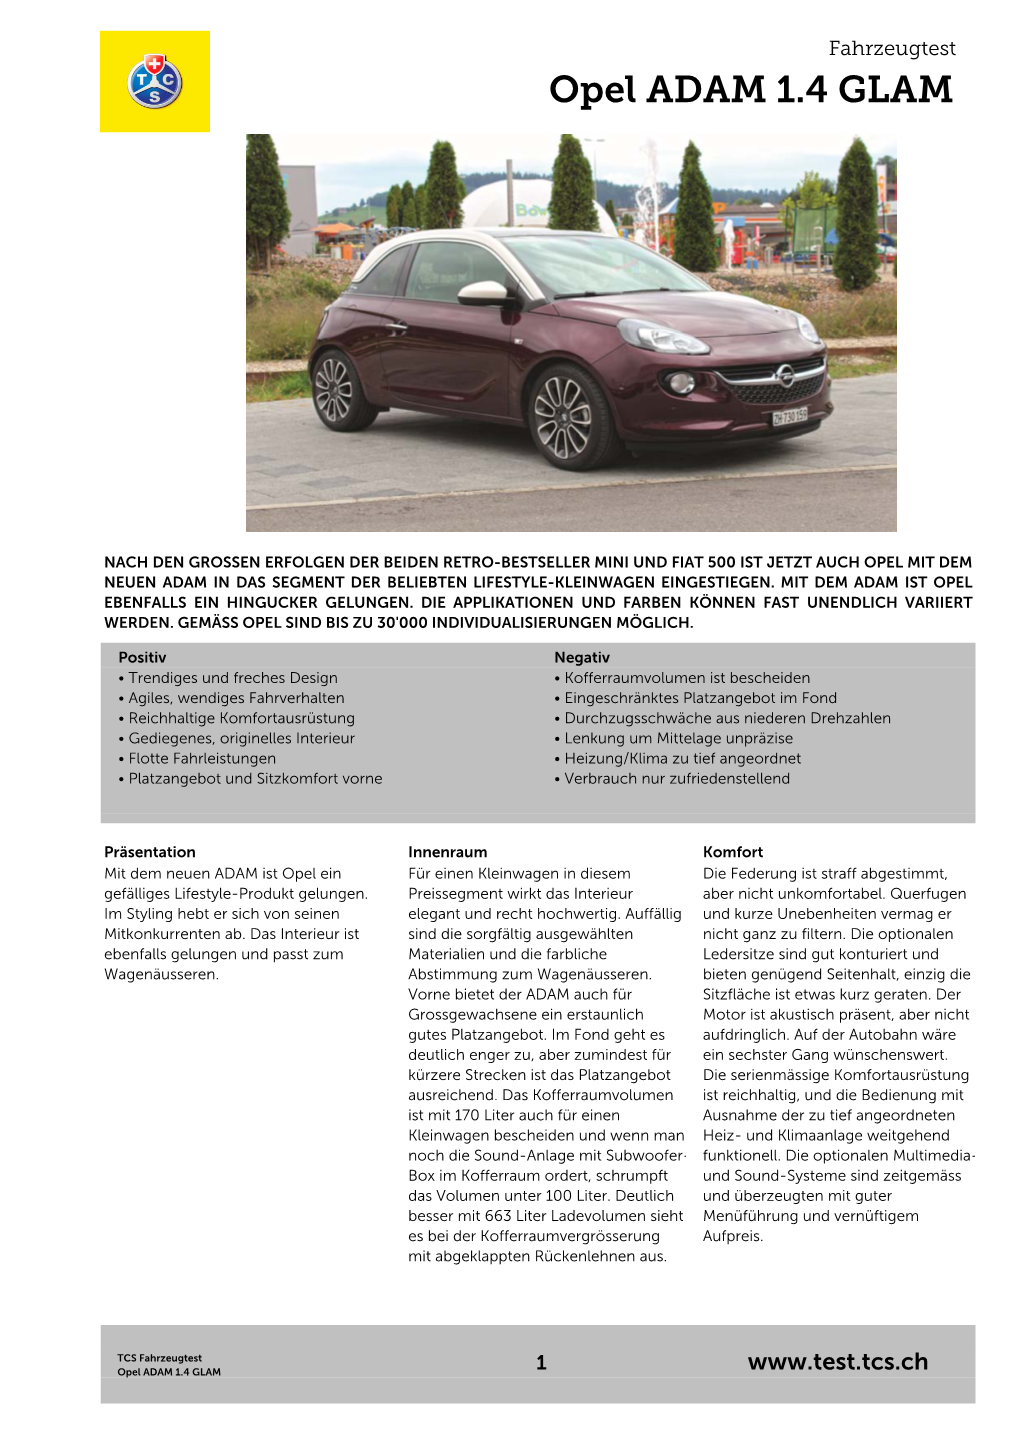 Opel ADAM 1.4 GLAM